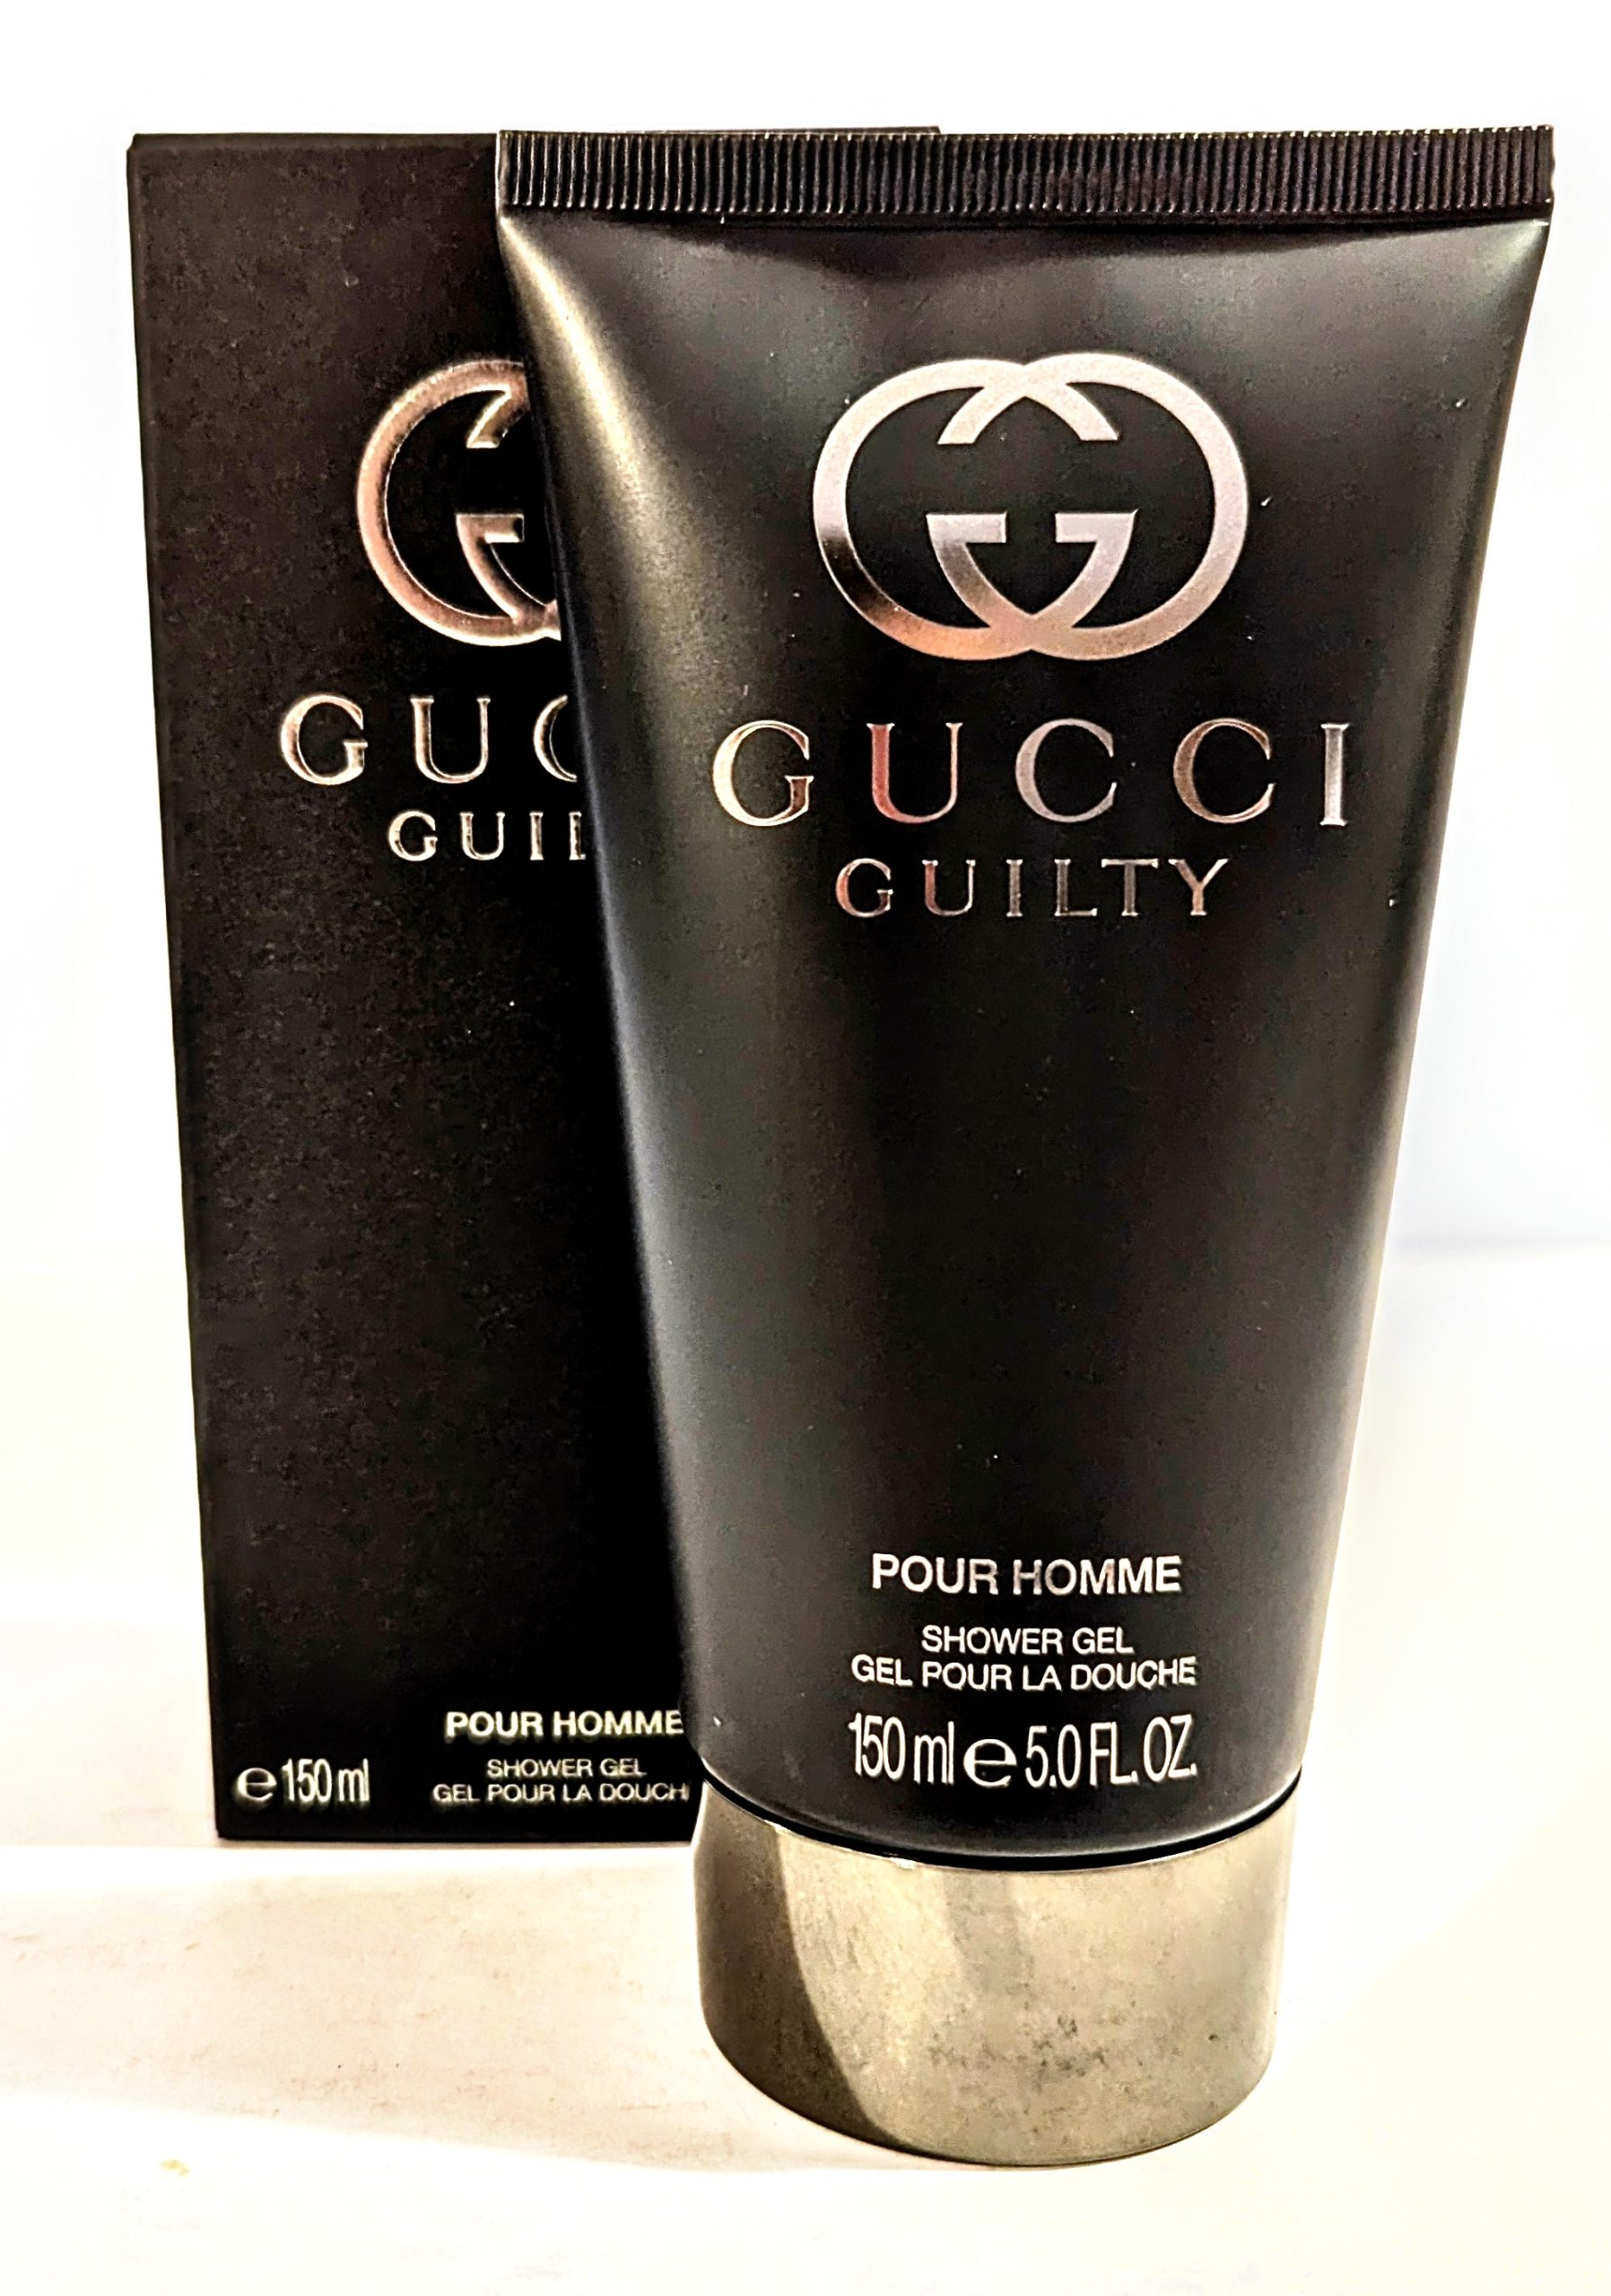 Gucci Guilty 150ml Shower Gel Body Wash for Men